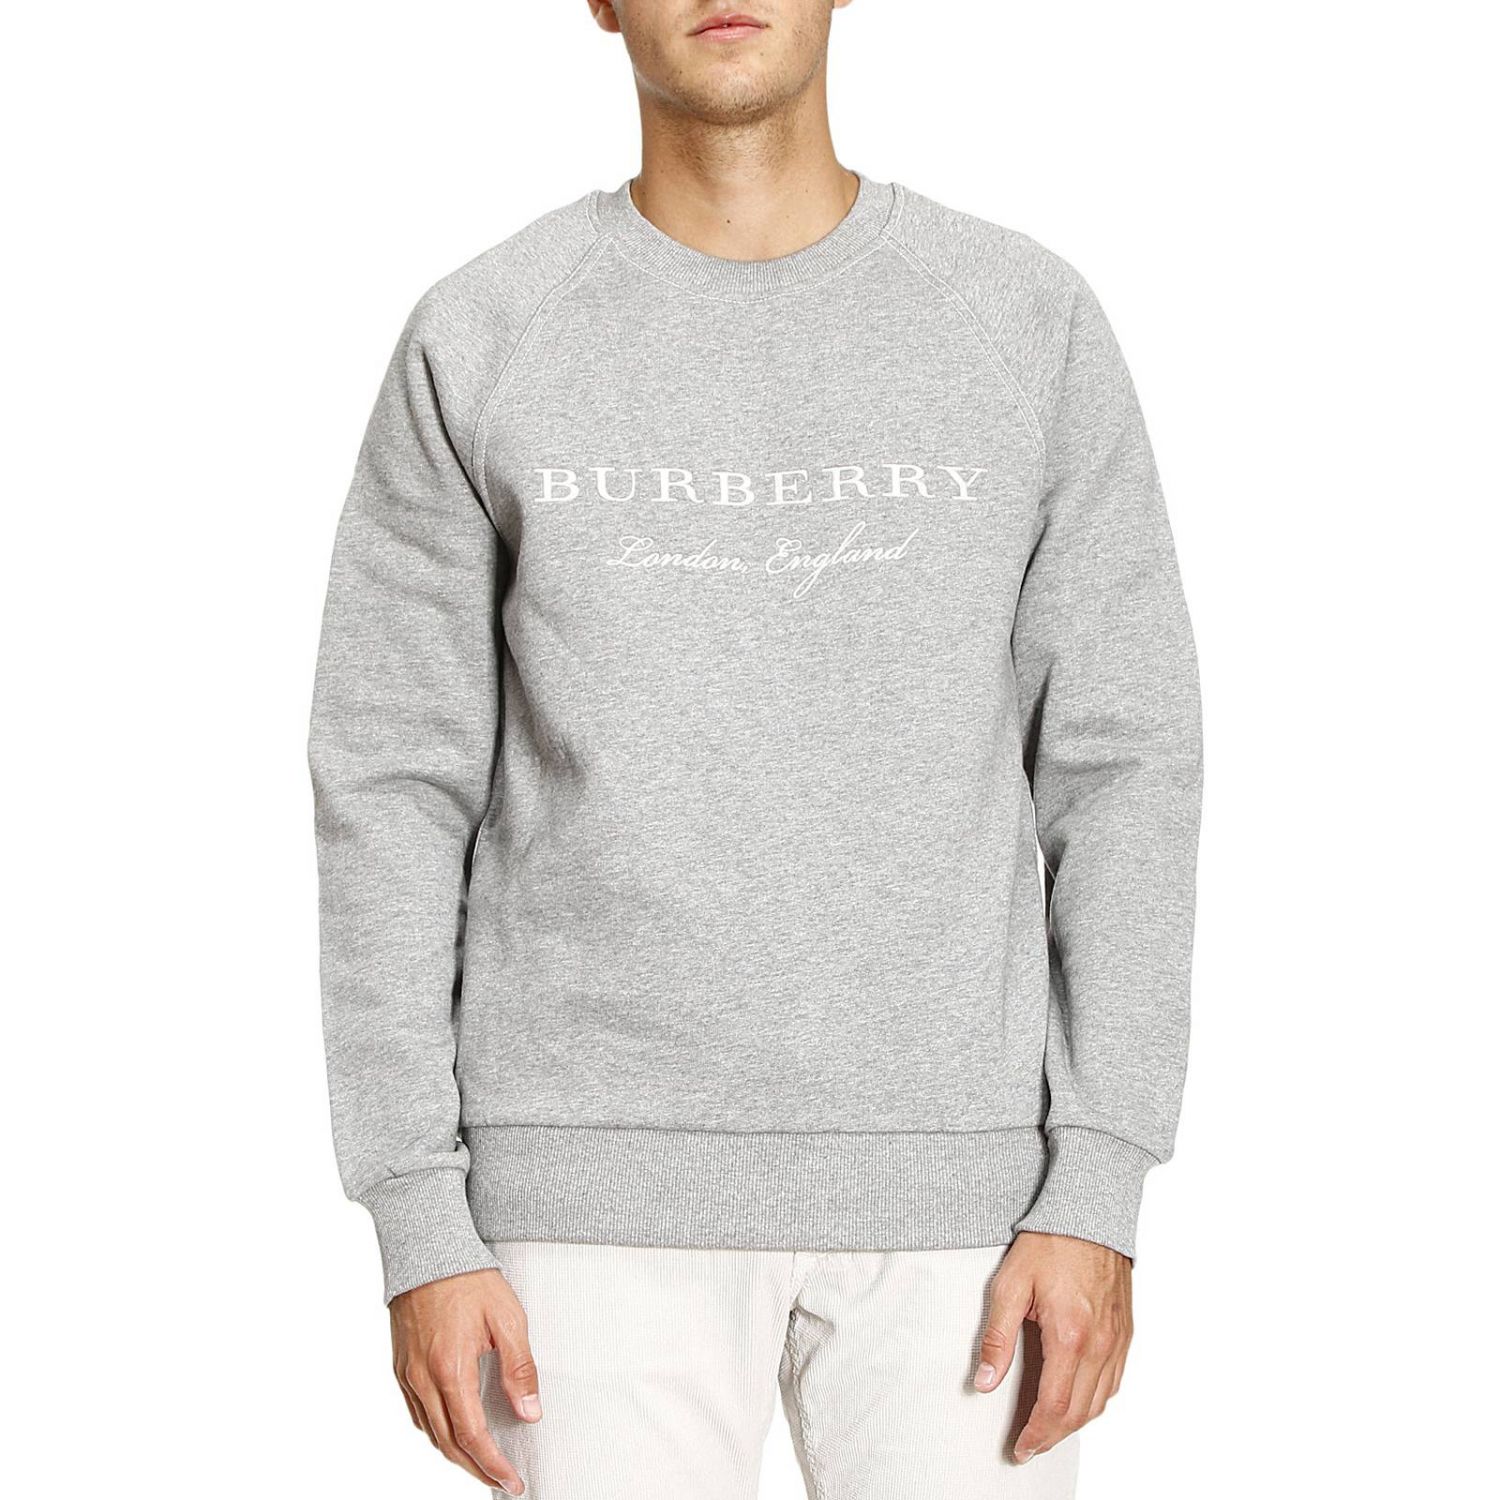 Burberry Sweatshirt Grey ., SAVE 54% 